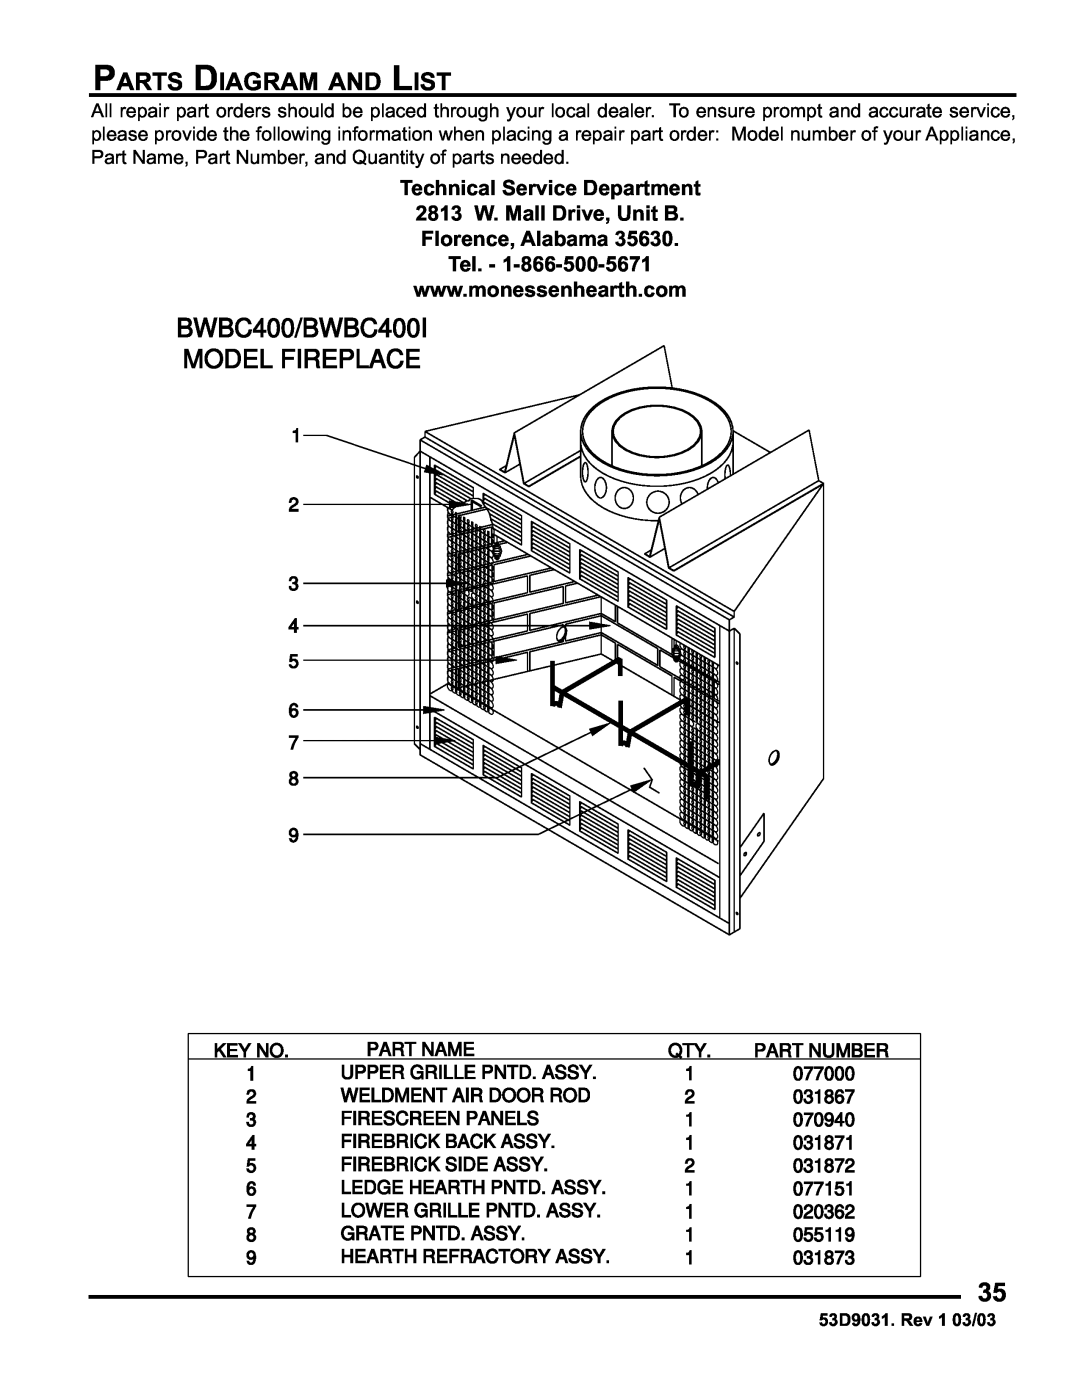 Monessen Hearth BWB400I manual Parts Diagram And List, BWBC400/BWBC400I, Model Fireplace 